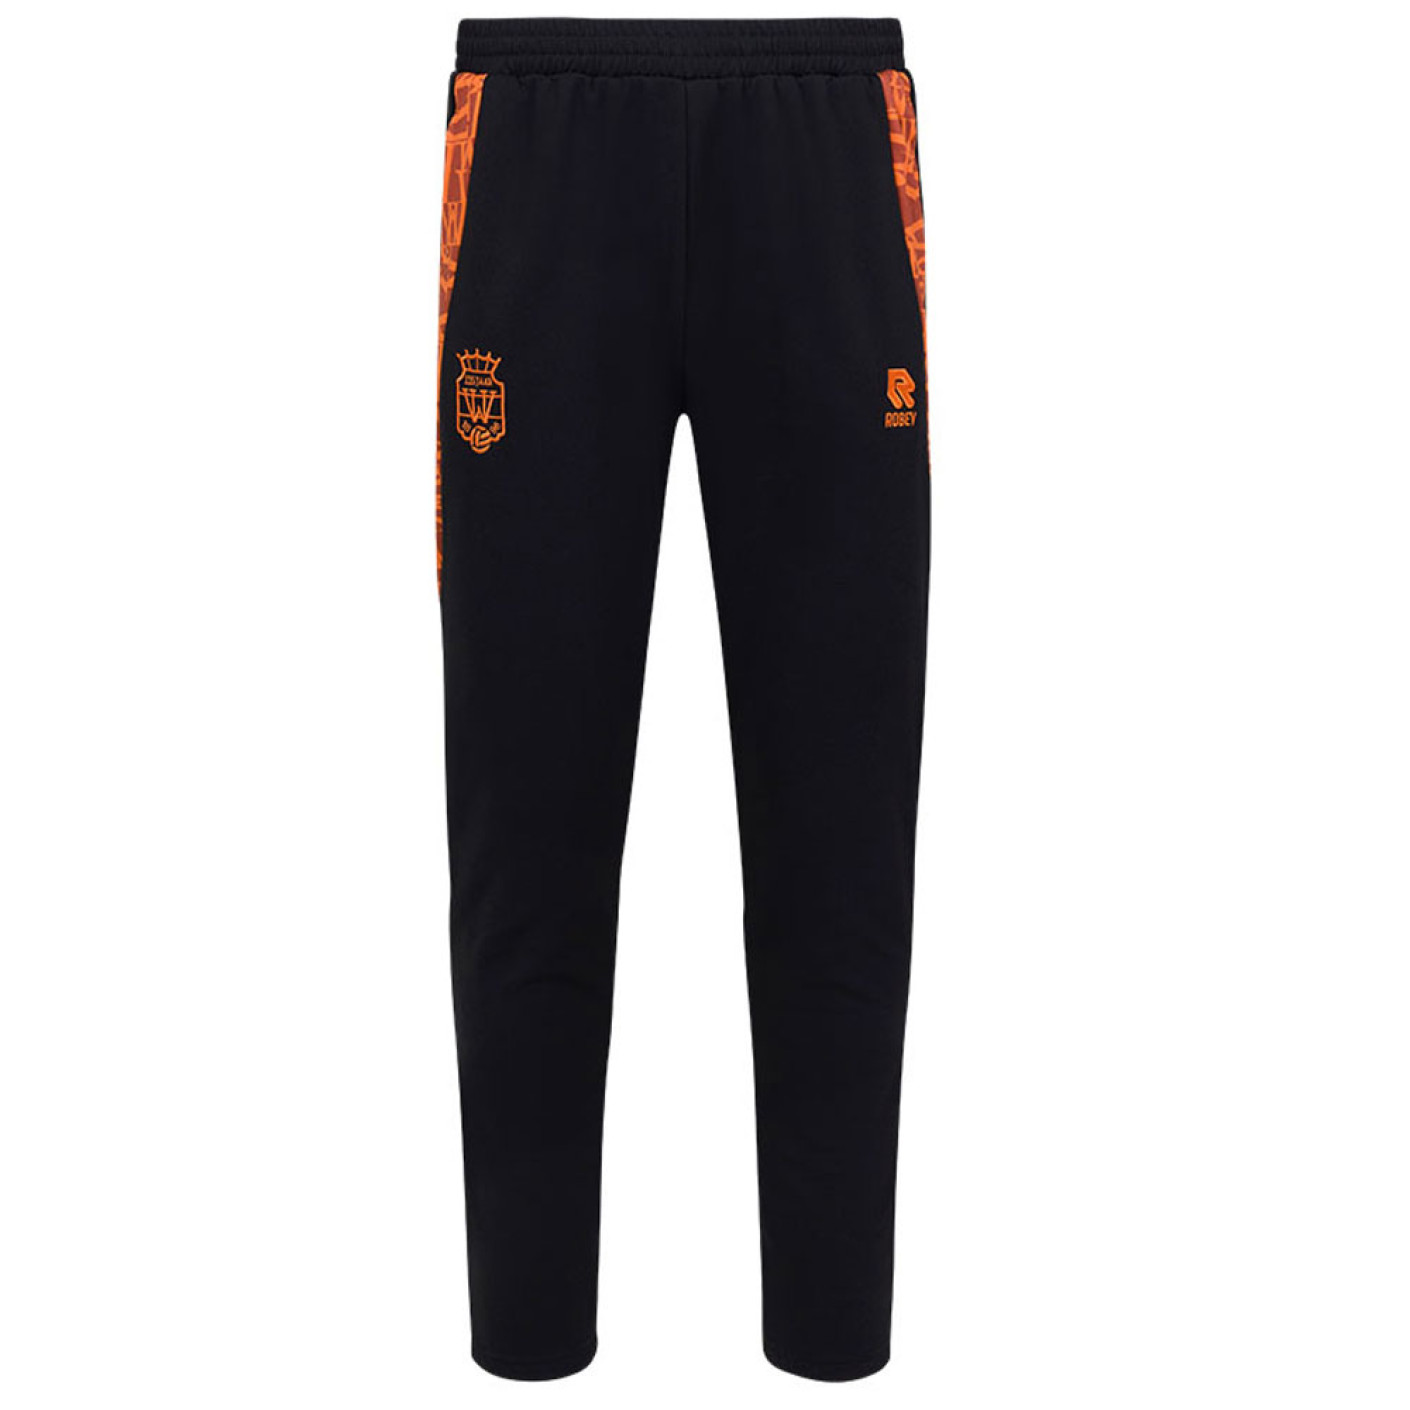 Pantalon d'entraînement Willem II 2021-2022 Noir Orange